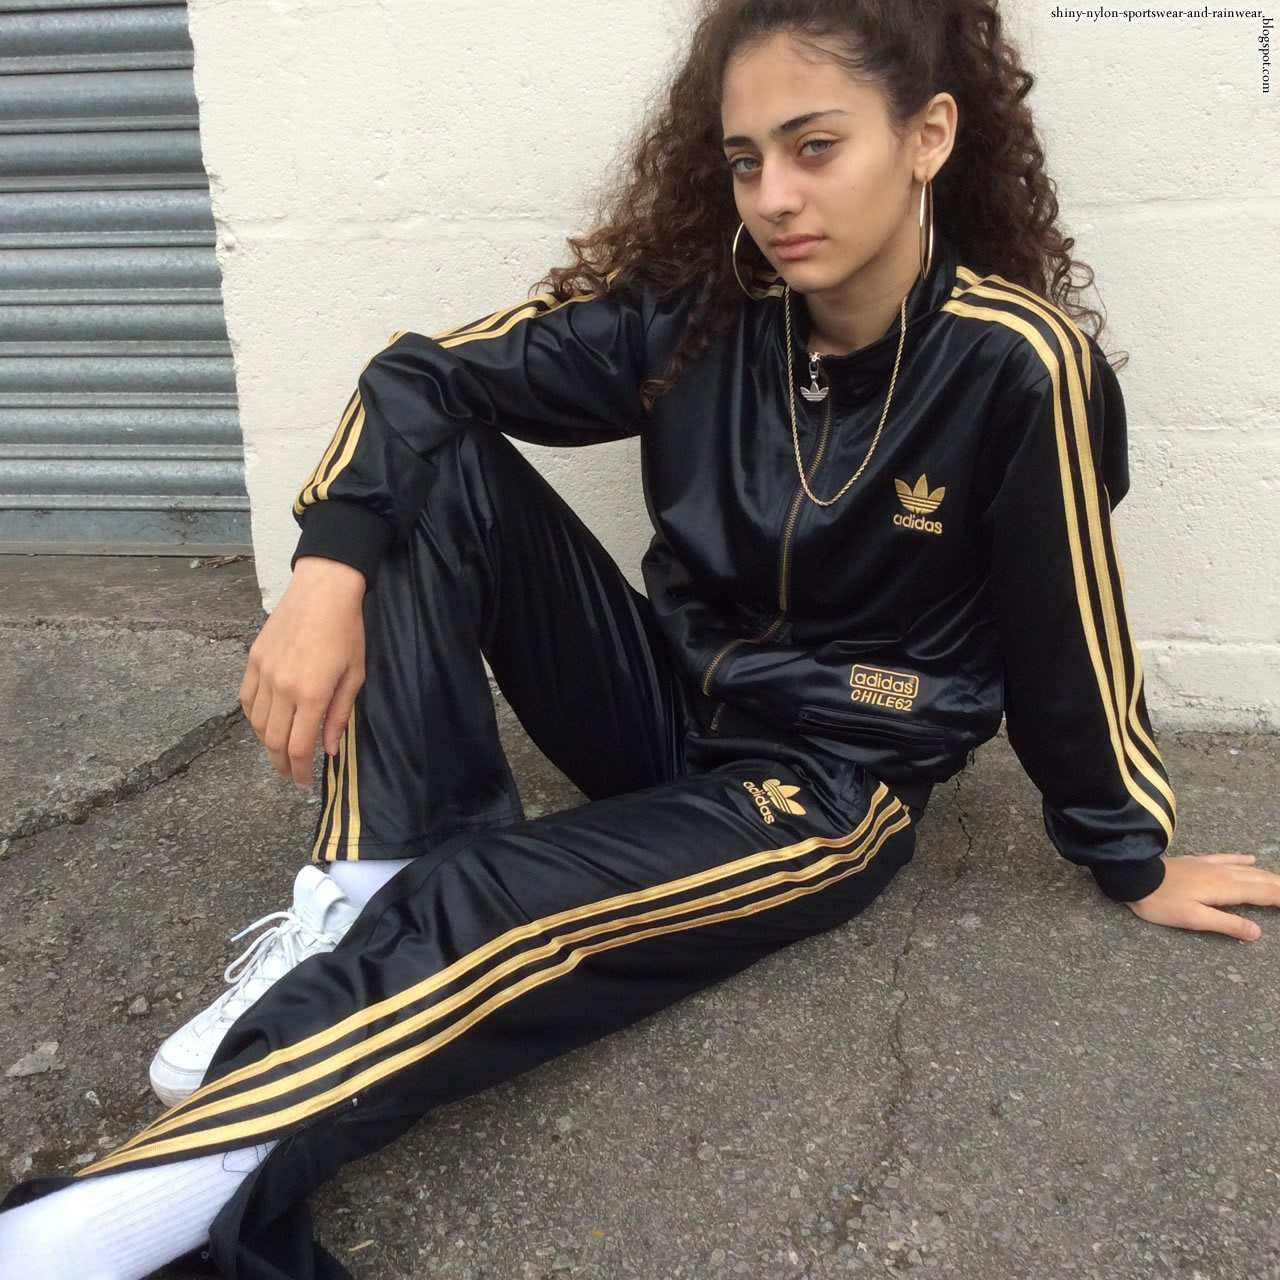 https://www.shinysports.com/gallery/vintage-adidas-chile-62-black-gold-wetlook-track-jacket-track-pants-womens-jpg.59069/full